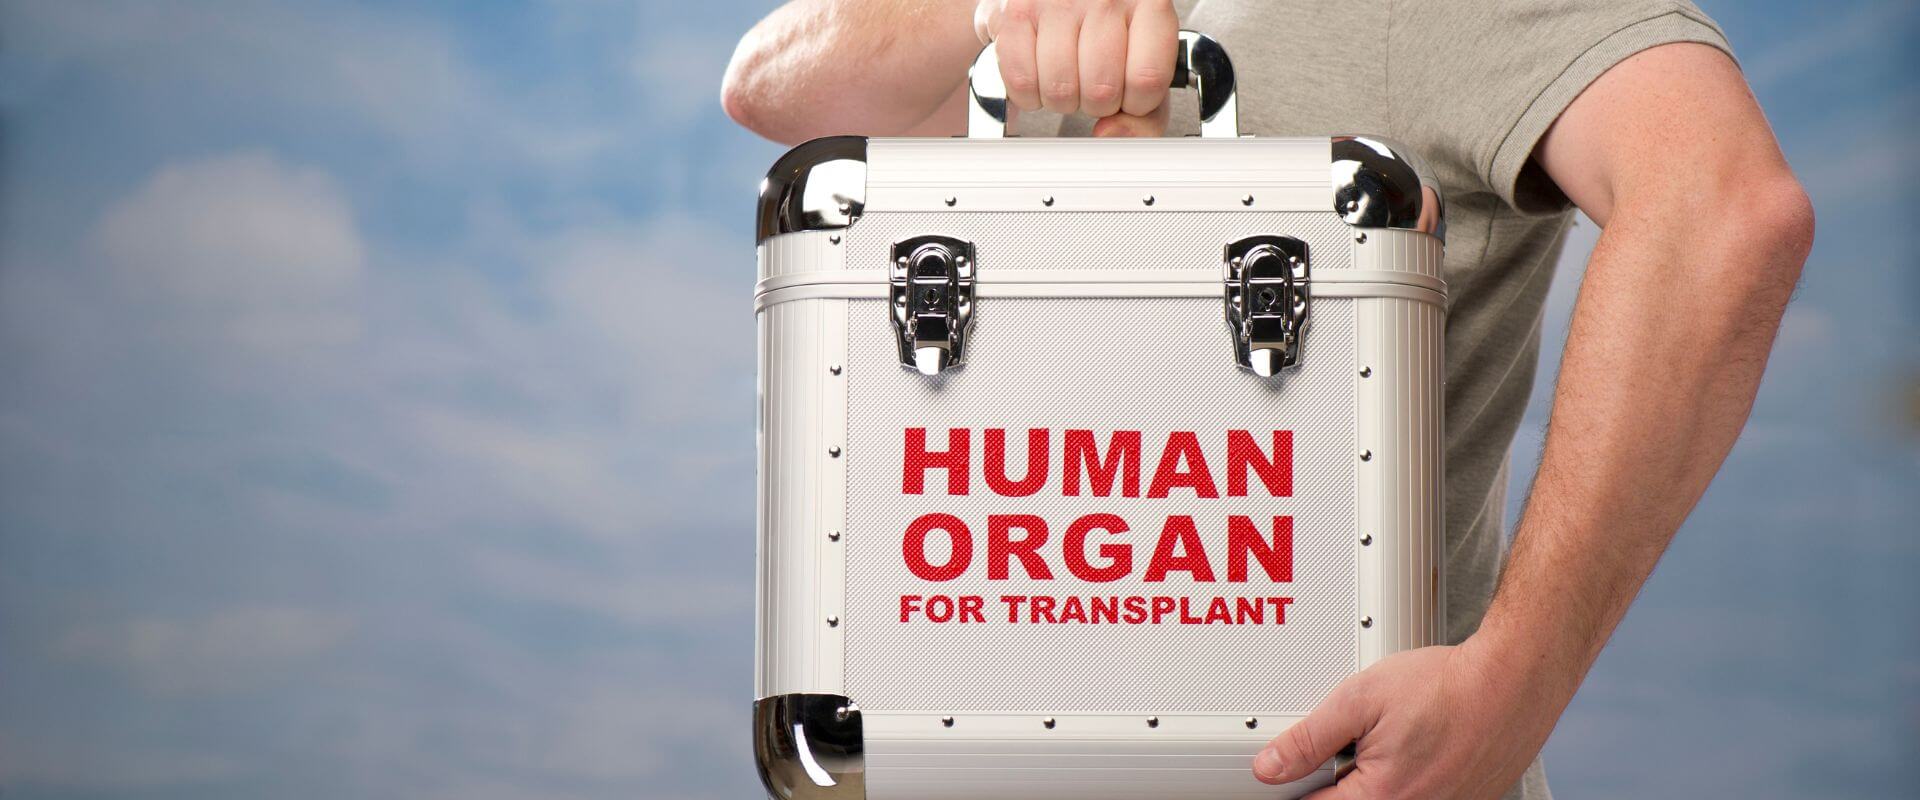 Medicare and Transplants image